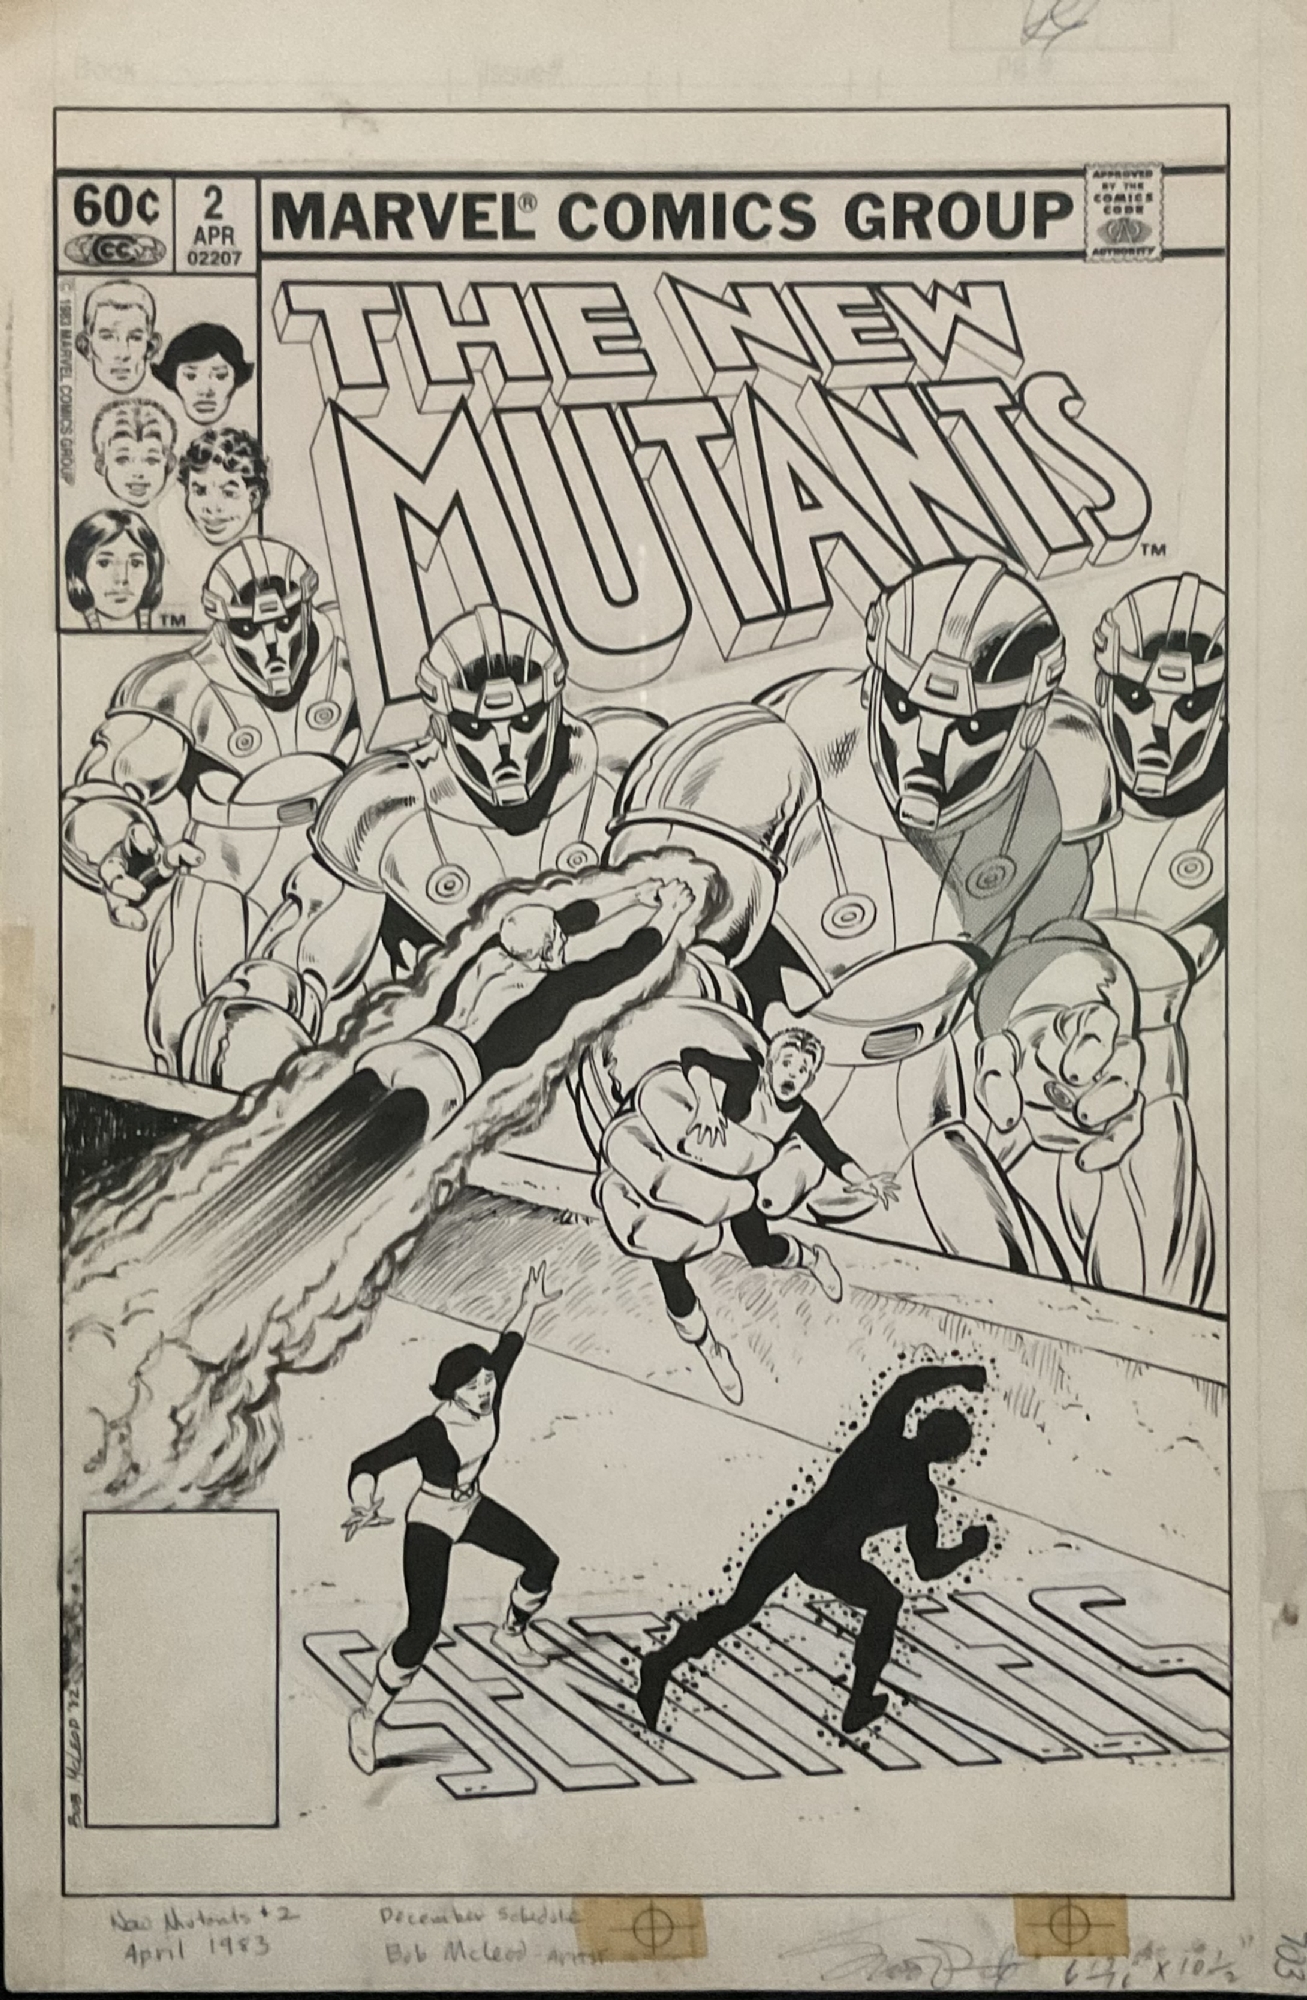 Product Details: New Mutants #2 (2019)